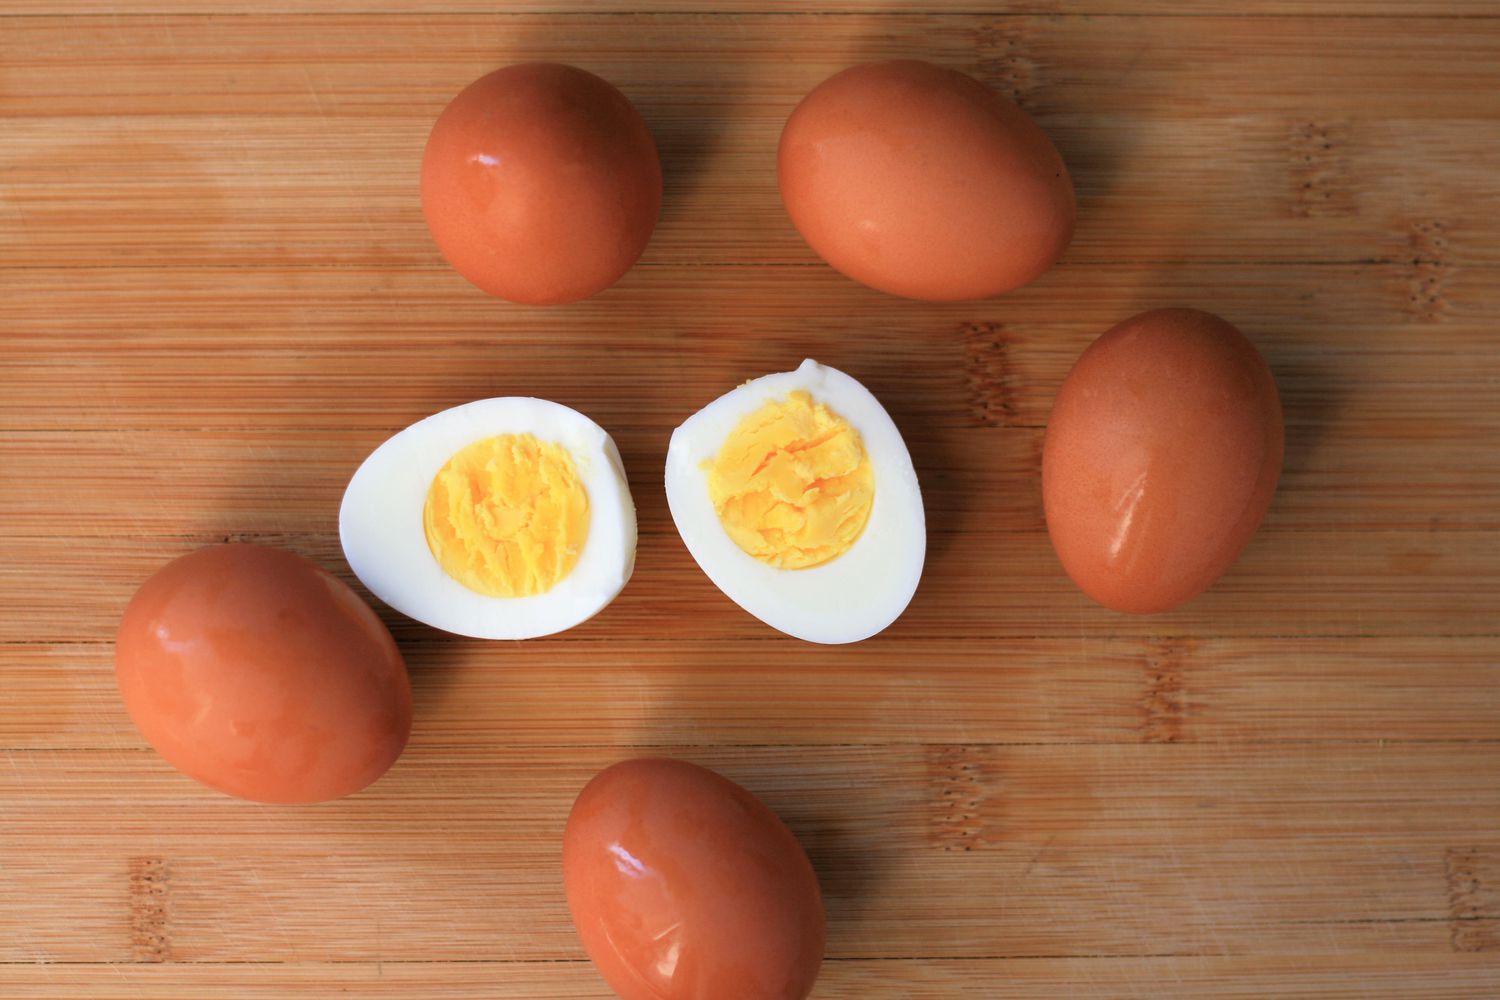 Яйца с вкрутыми вкрутую